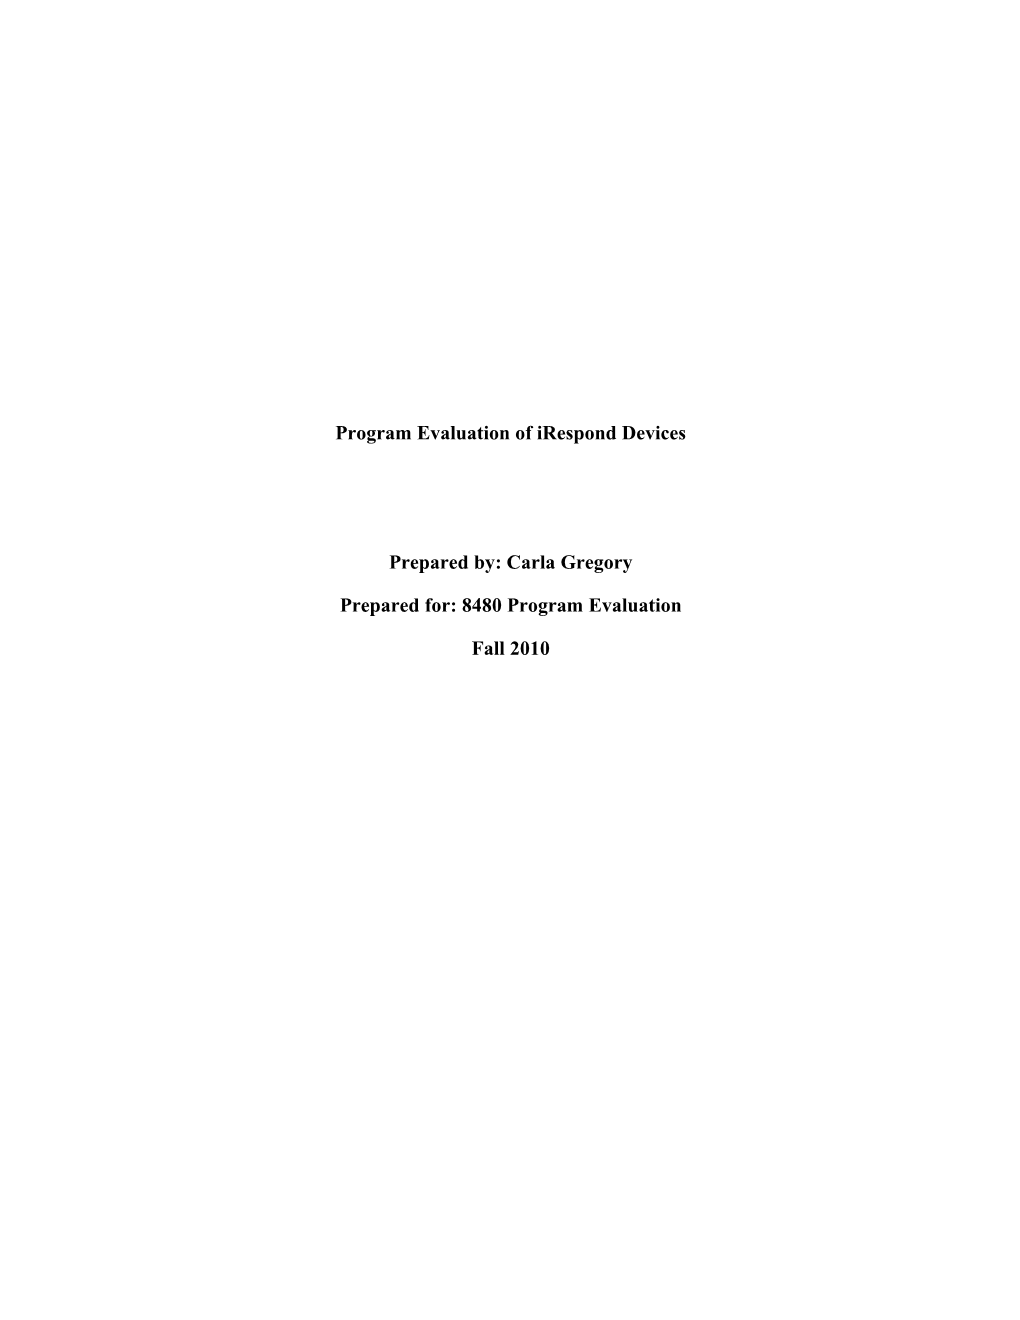 Program Evaluation of Irespond Devices